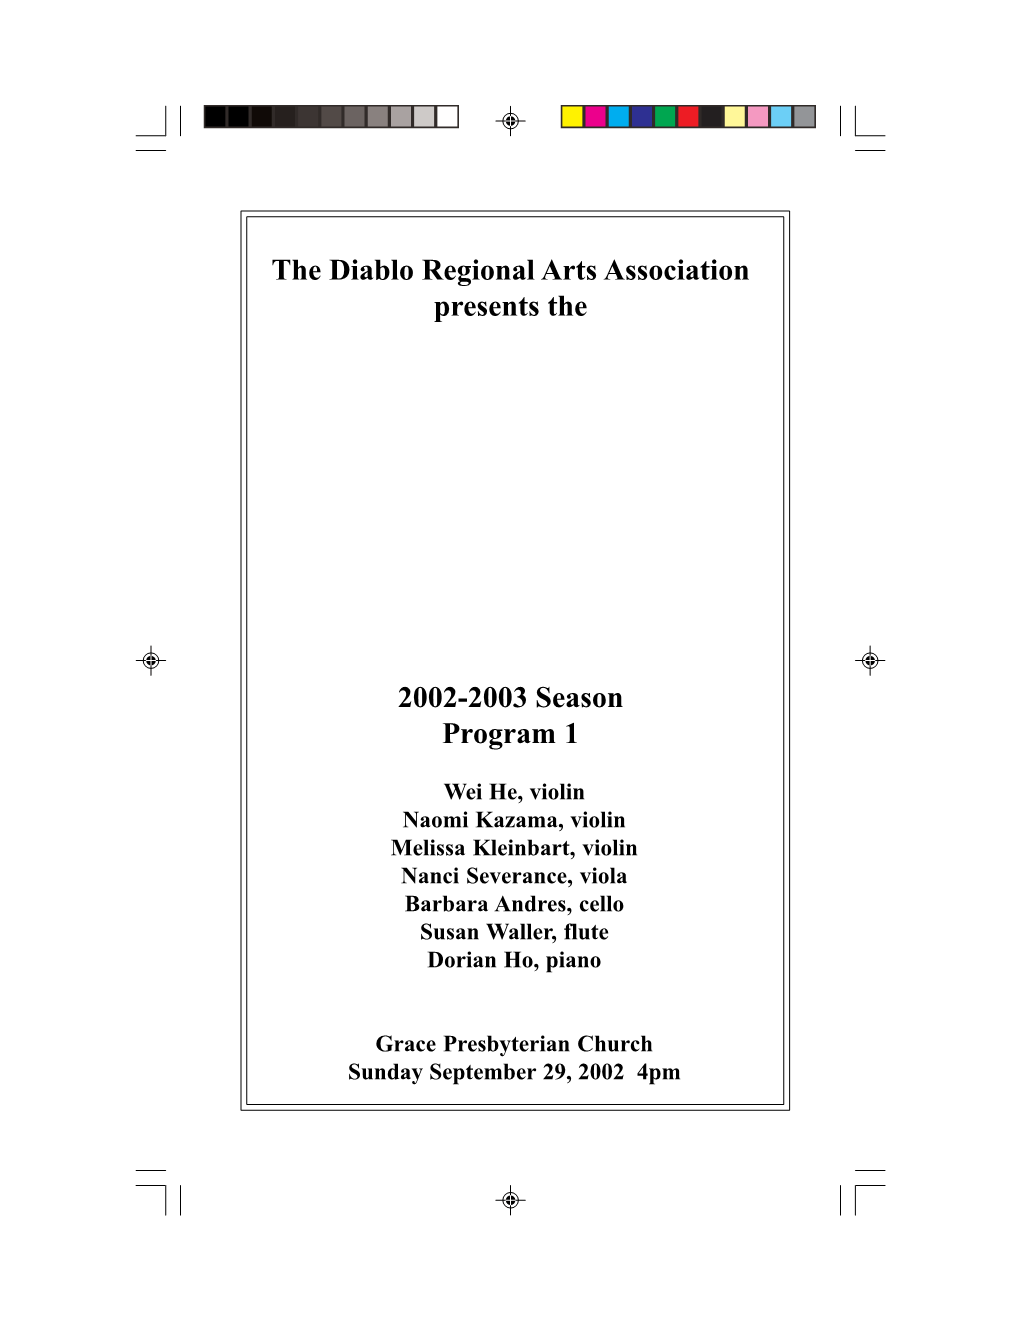 The Diablo Regional Arts Association Presents the 2002-2003 Season